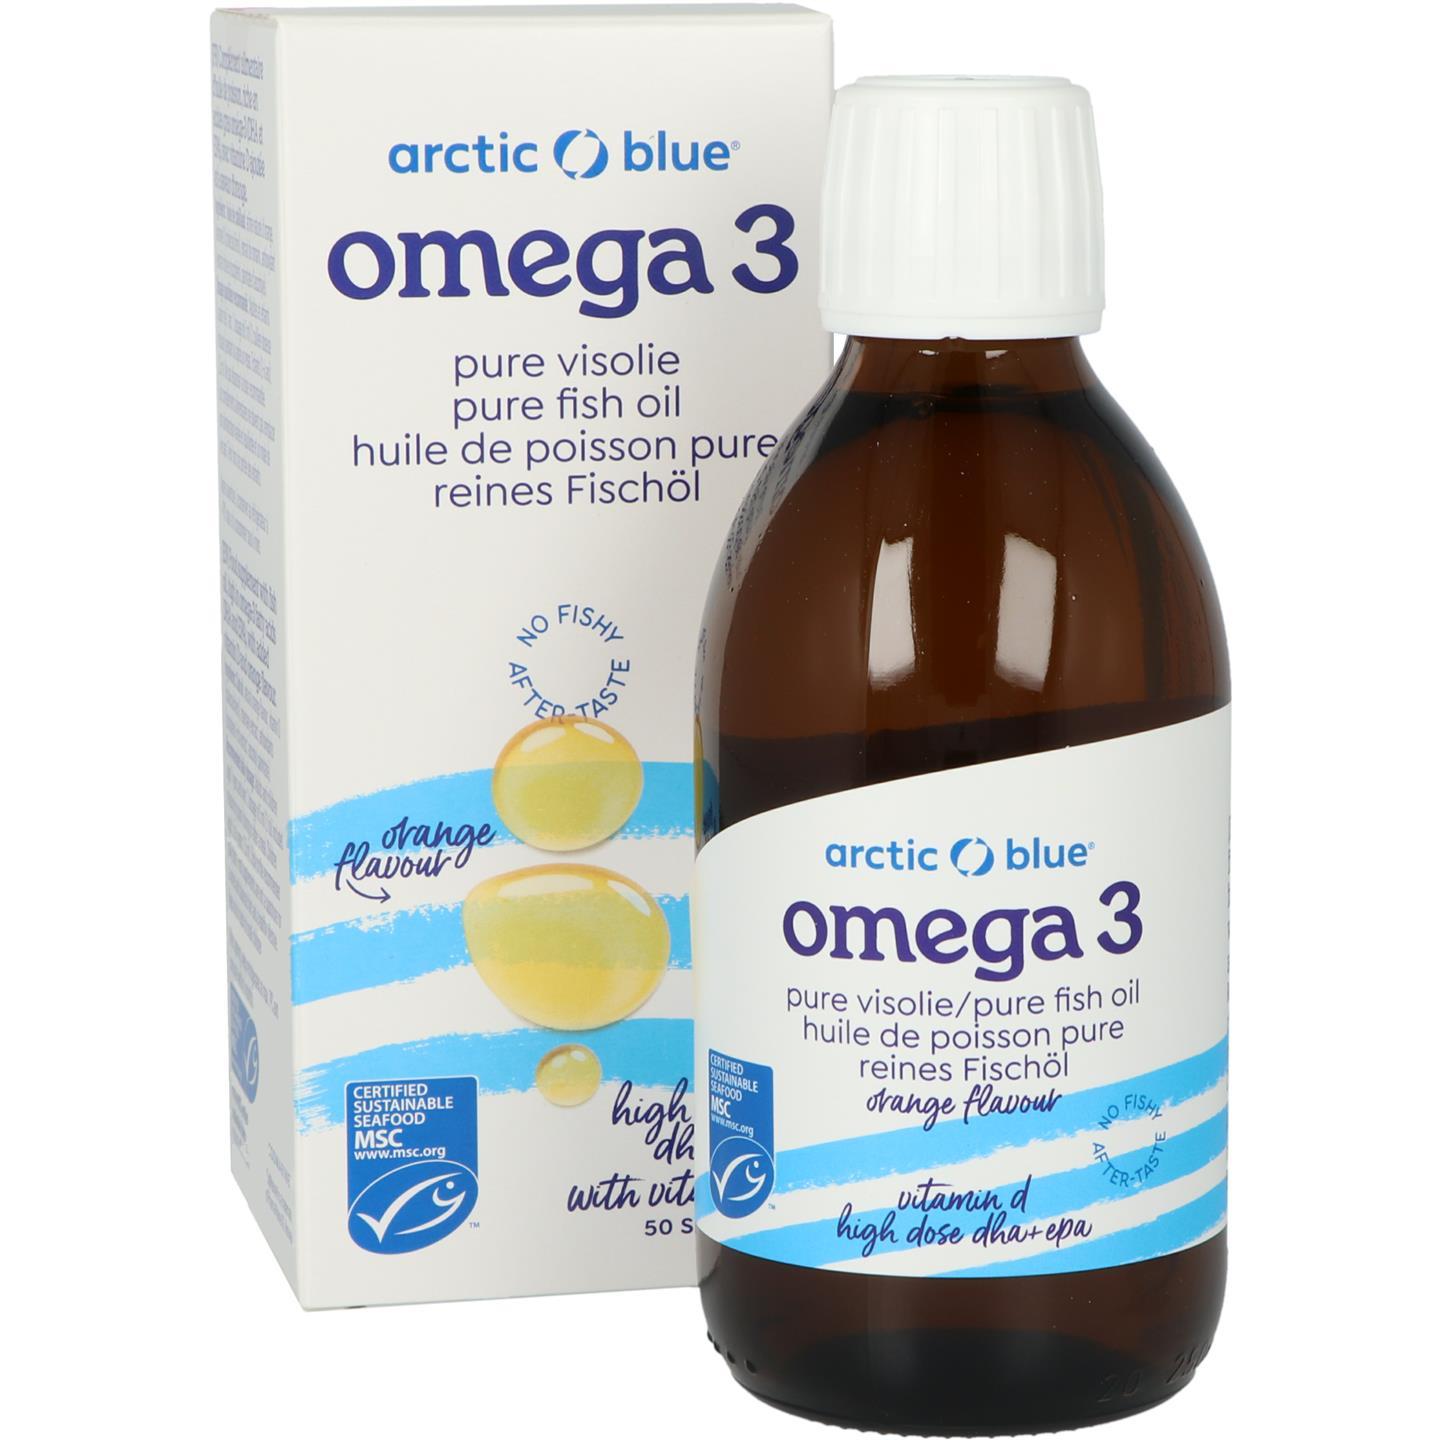 hemel Streven Trojaanse paard Omega 3 Pure Visolie met Vitamine D (Arctic Blue)